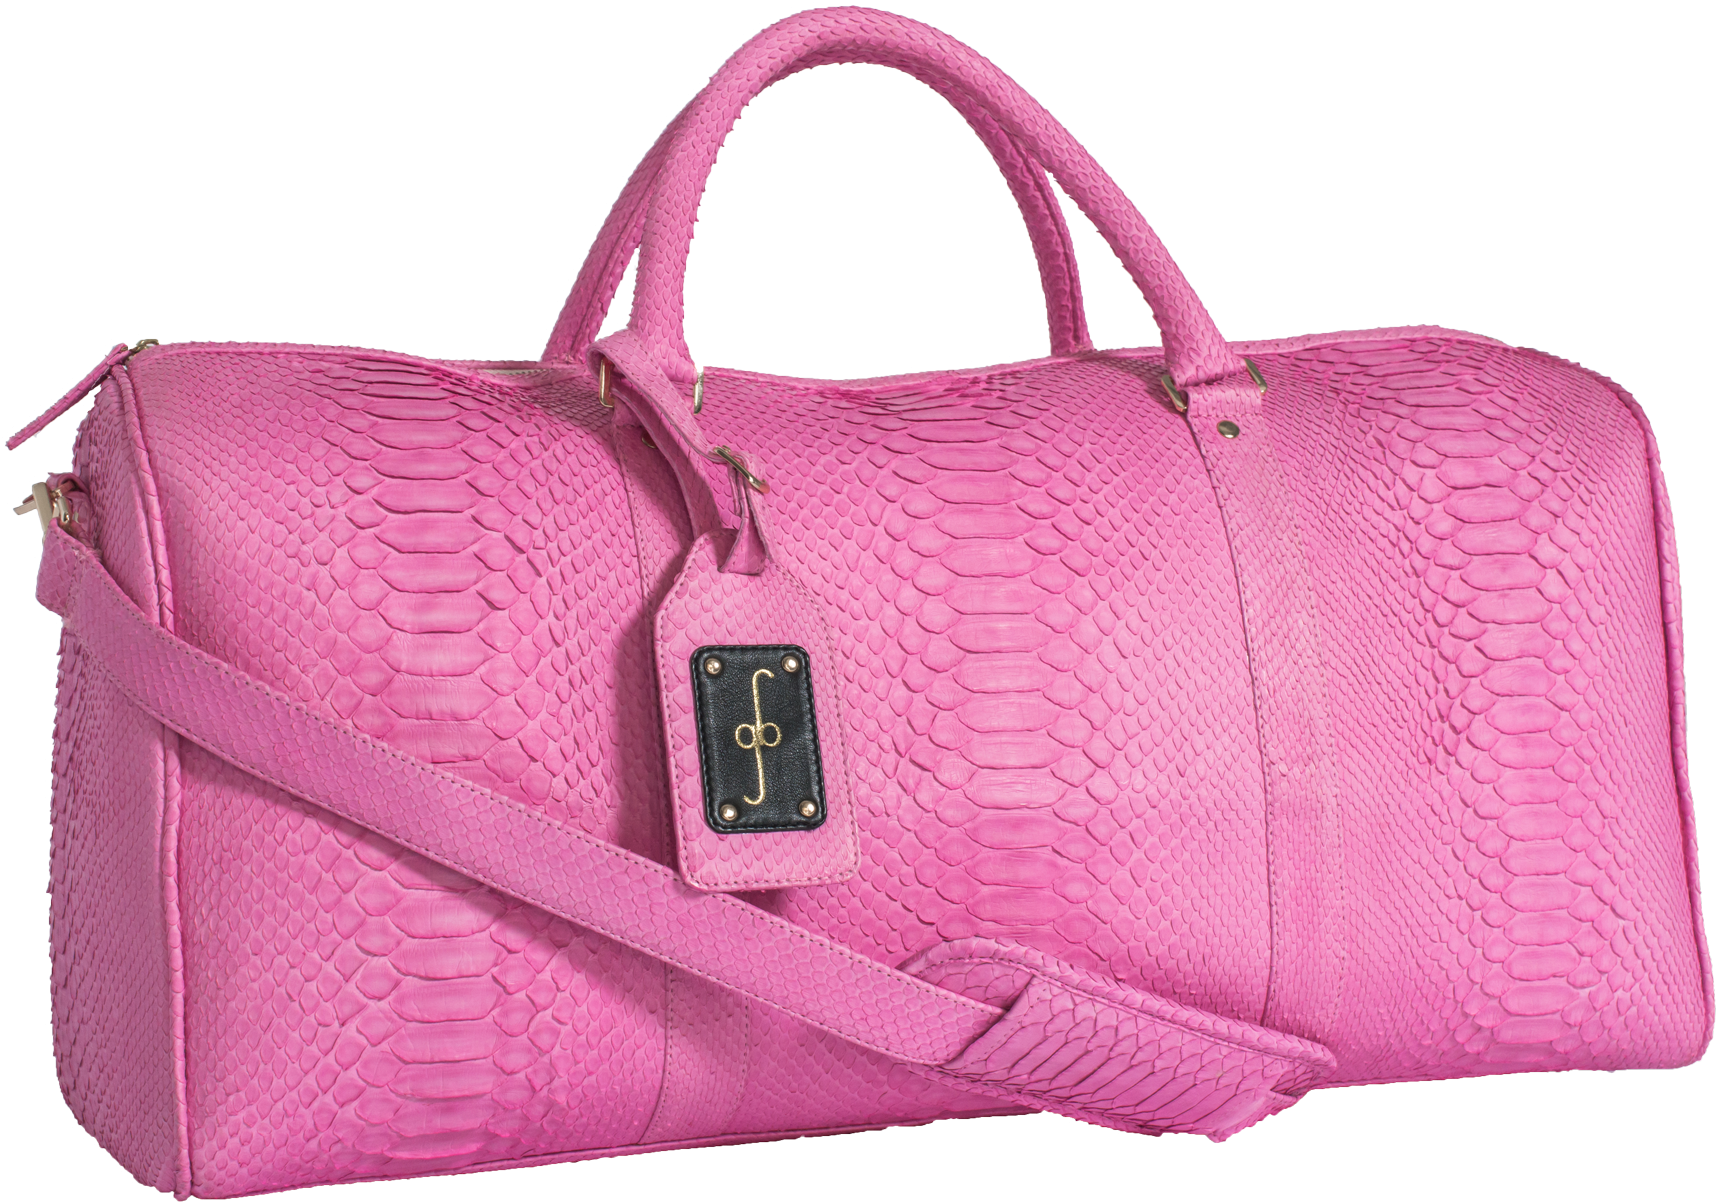 Duffel Bag In Pink Python - Handbag (2048x1367), Png Download